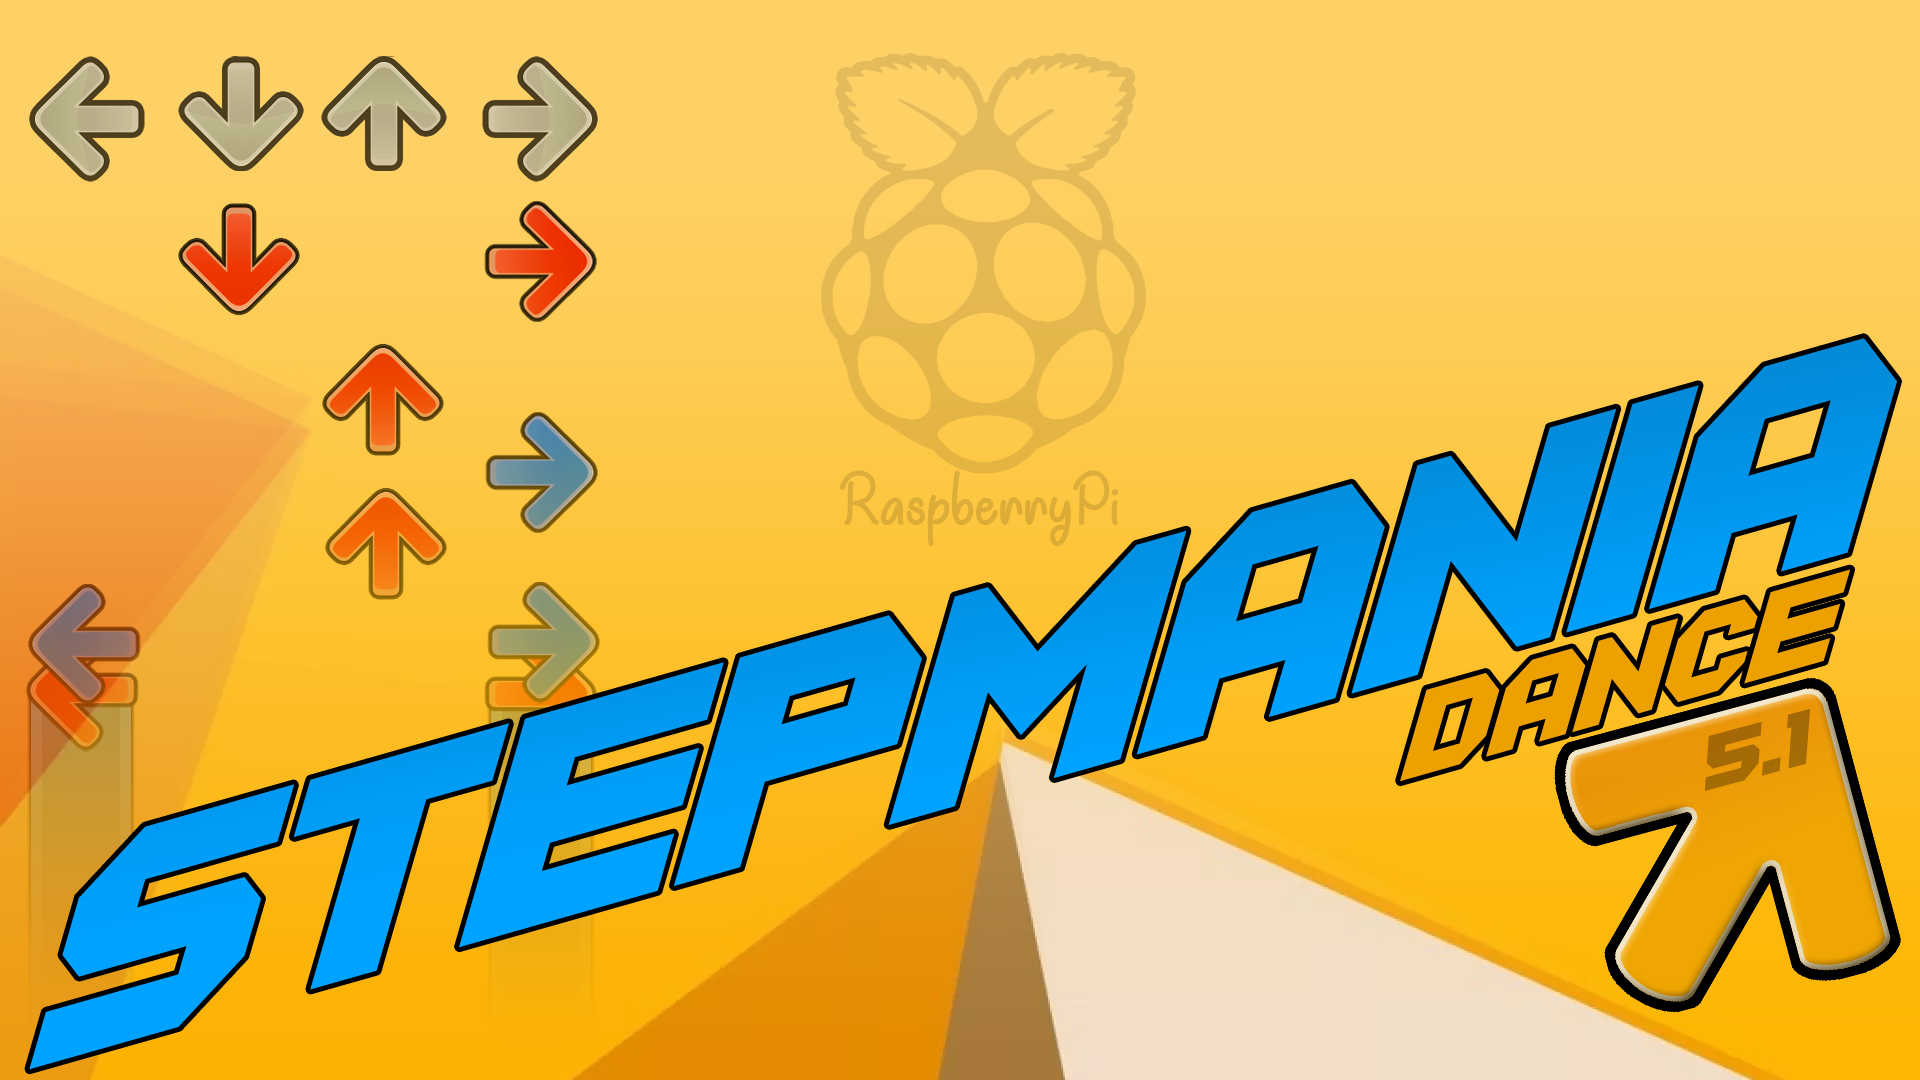 StepMania on Raspbery Pi Title Card